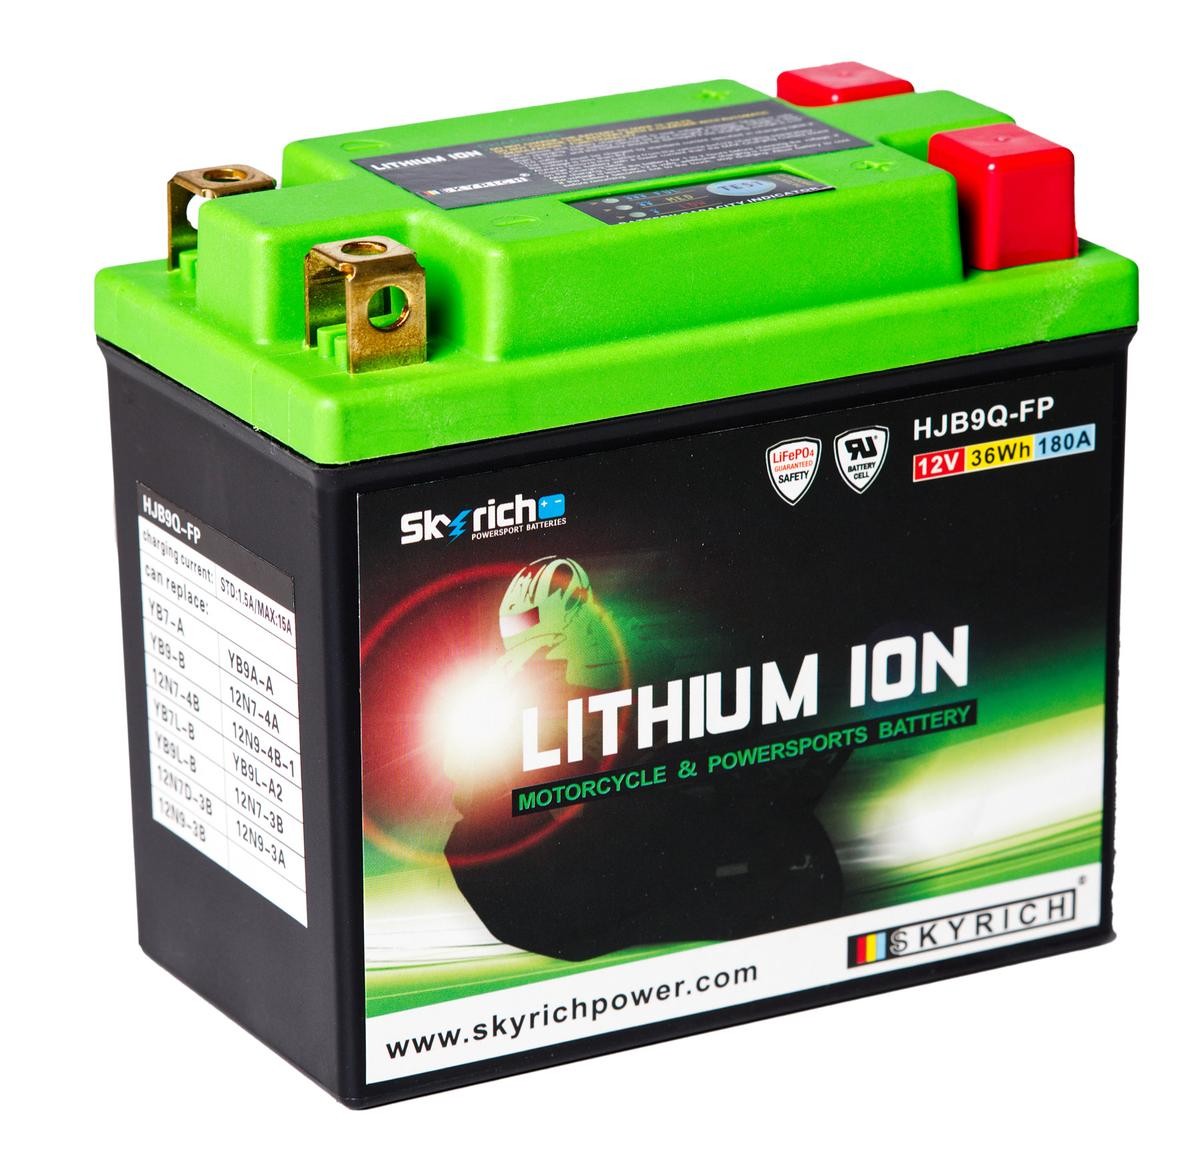 PIAGGIO FLY Batterie 12V 3Ah 180A N Li-Ionen-Batterie SKYRICH LITHIUM ION HJB9Q-FP